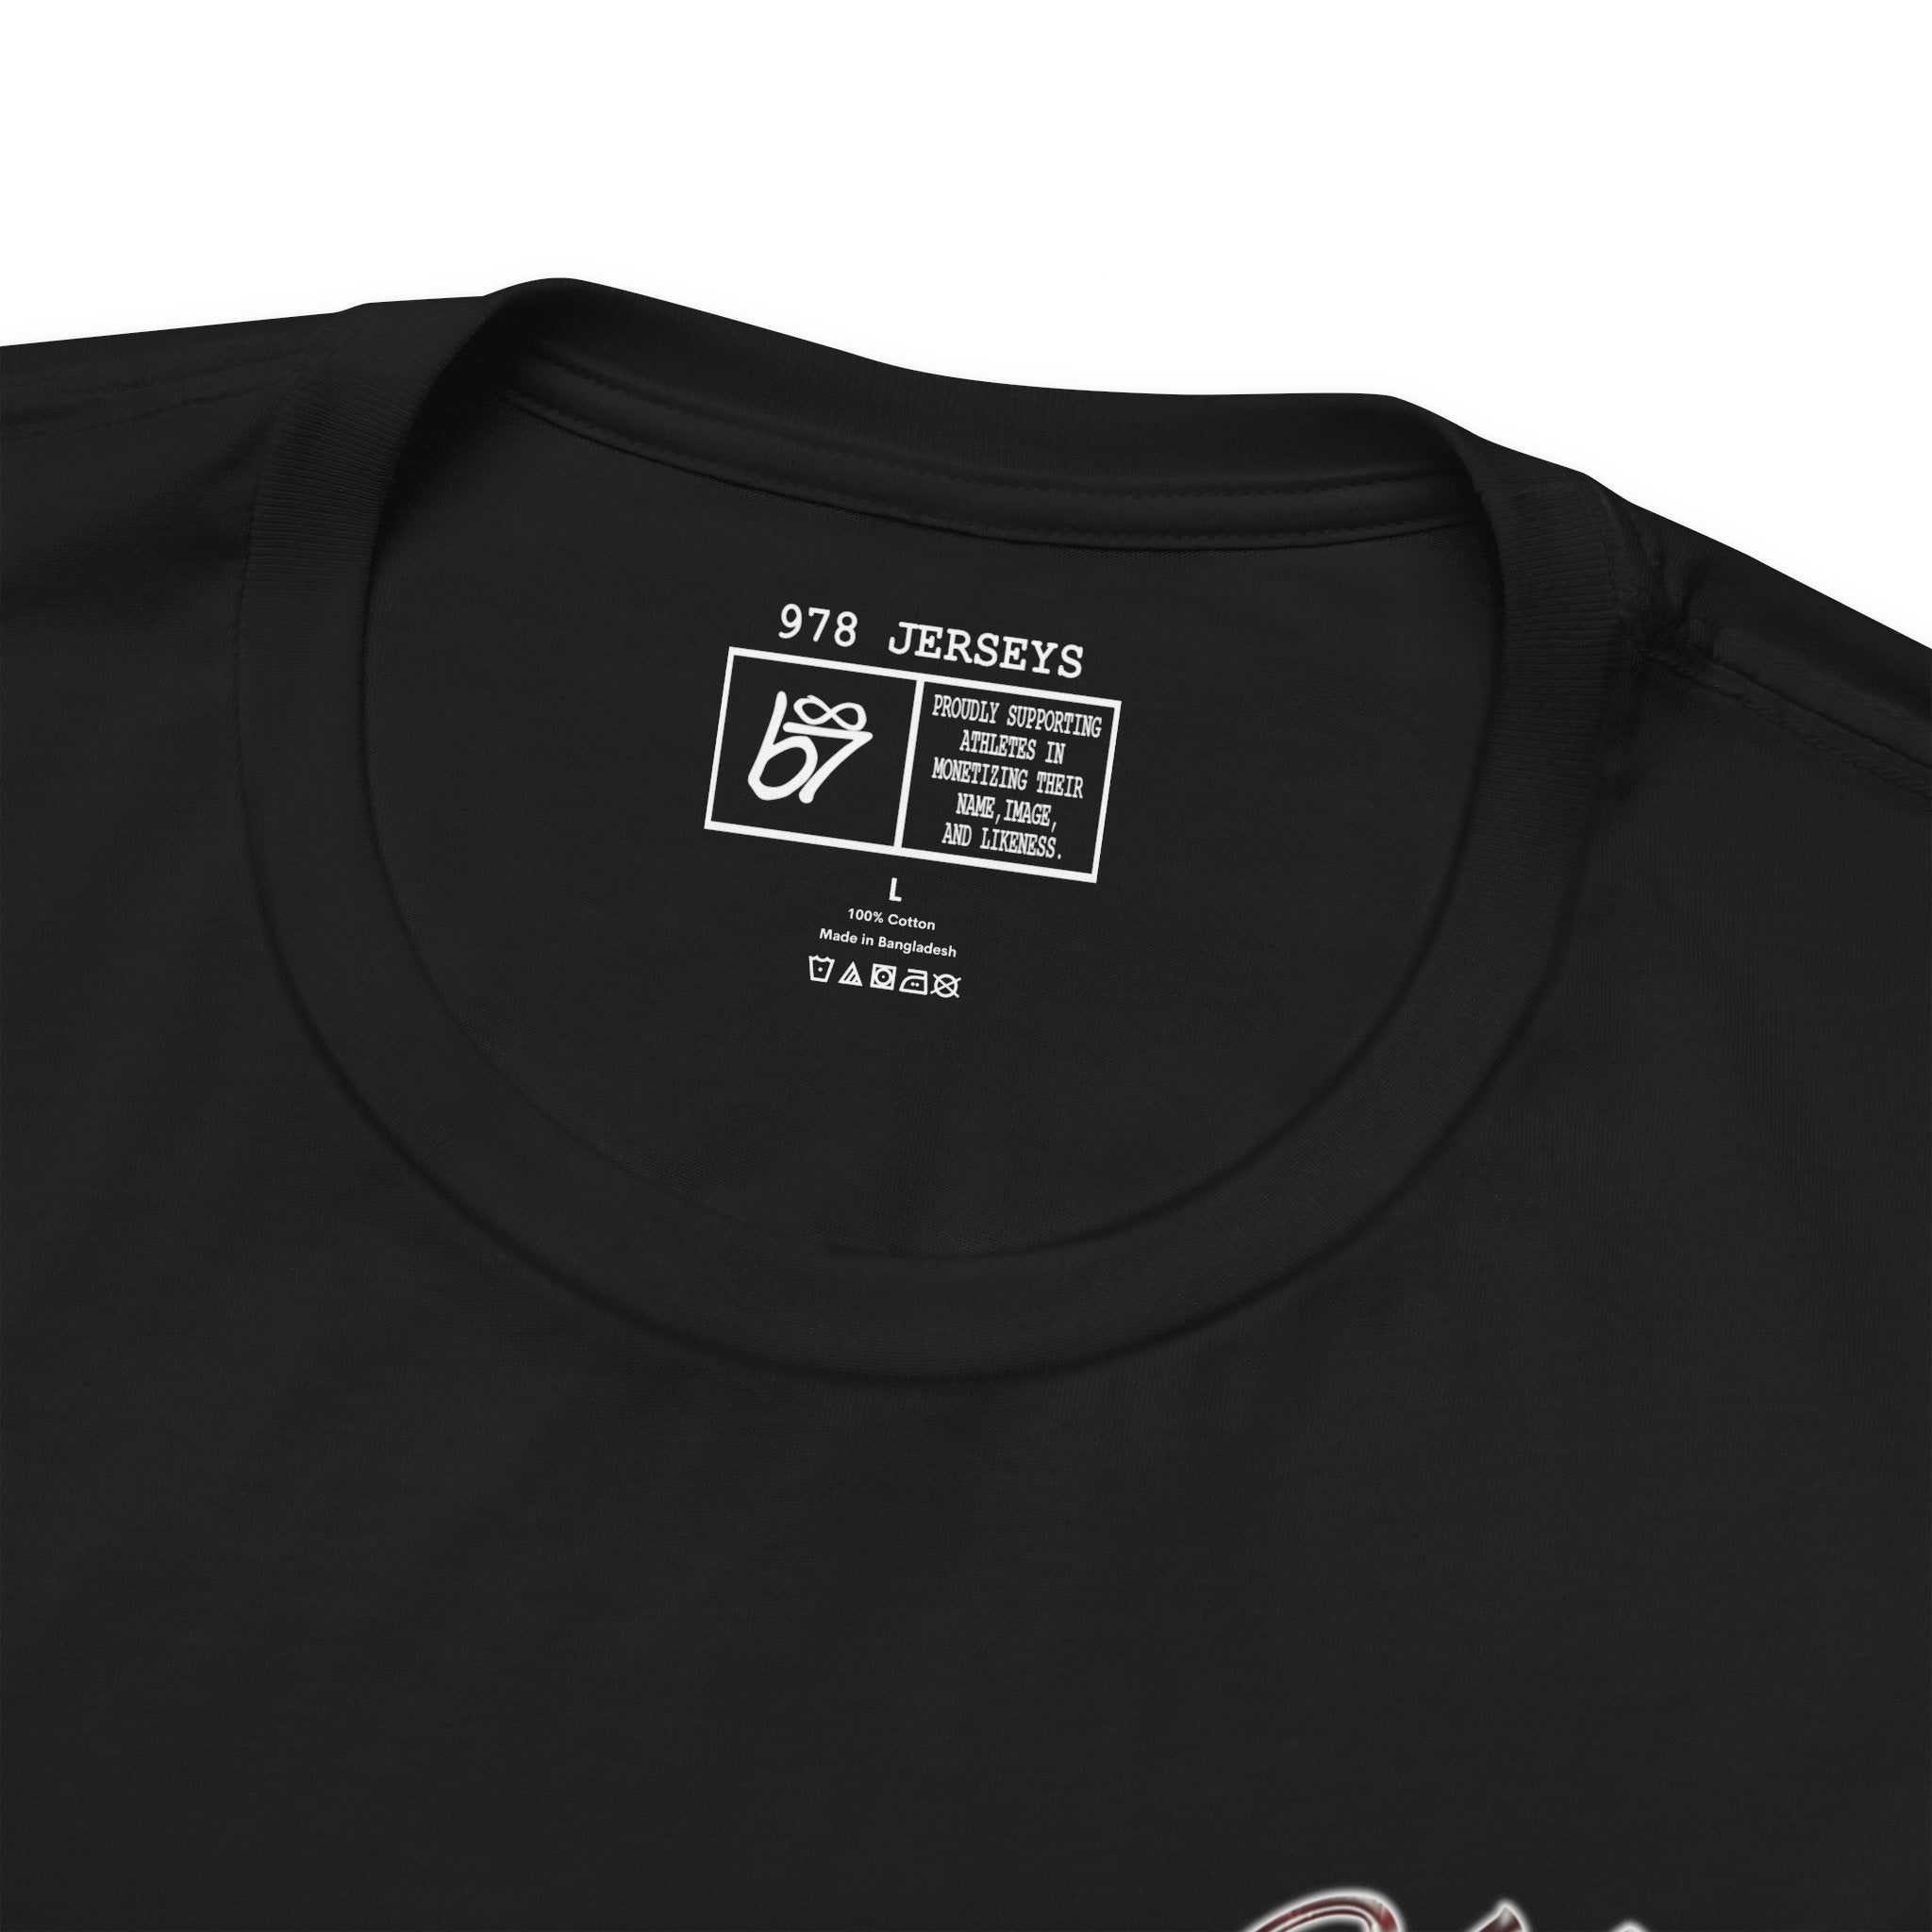 Exclusive Release - Myles Murao SDSU Football T-Shirt